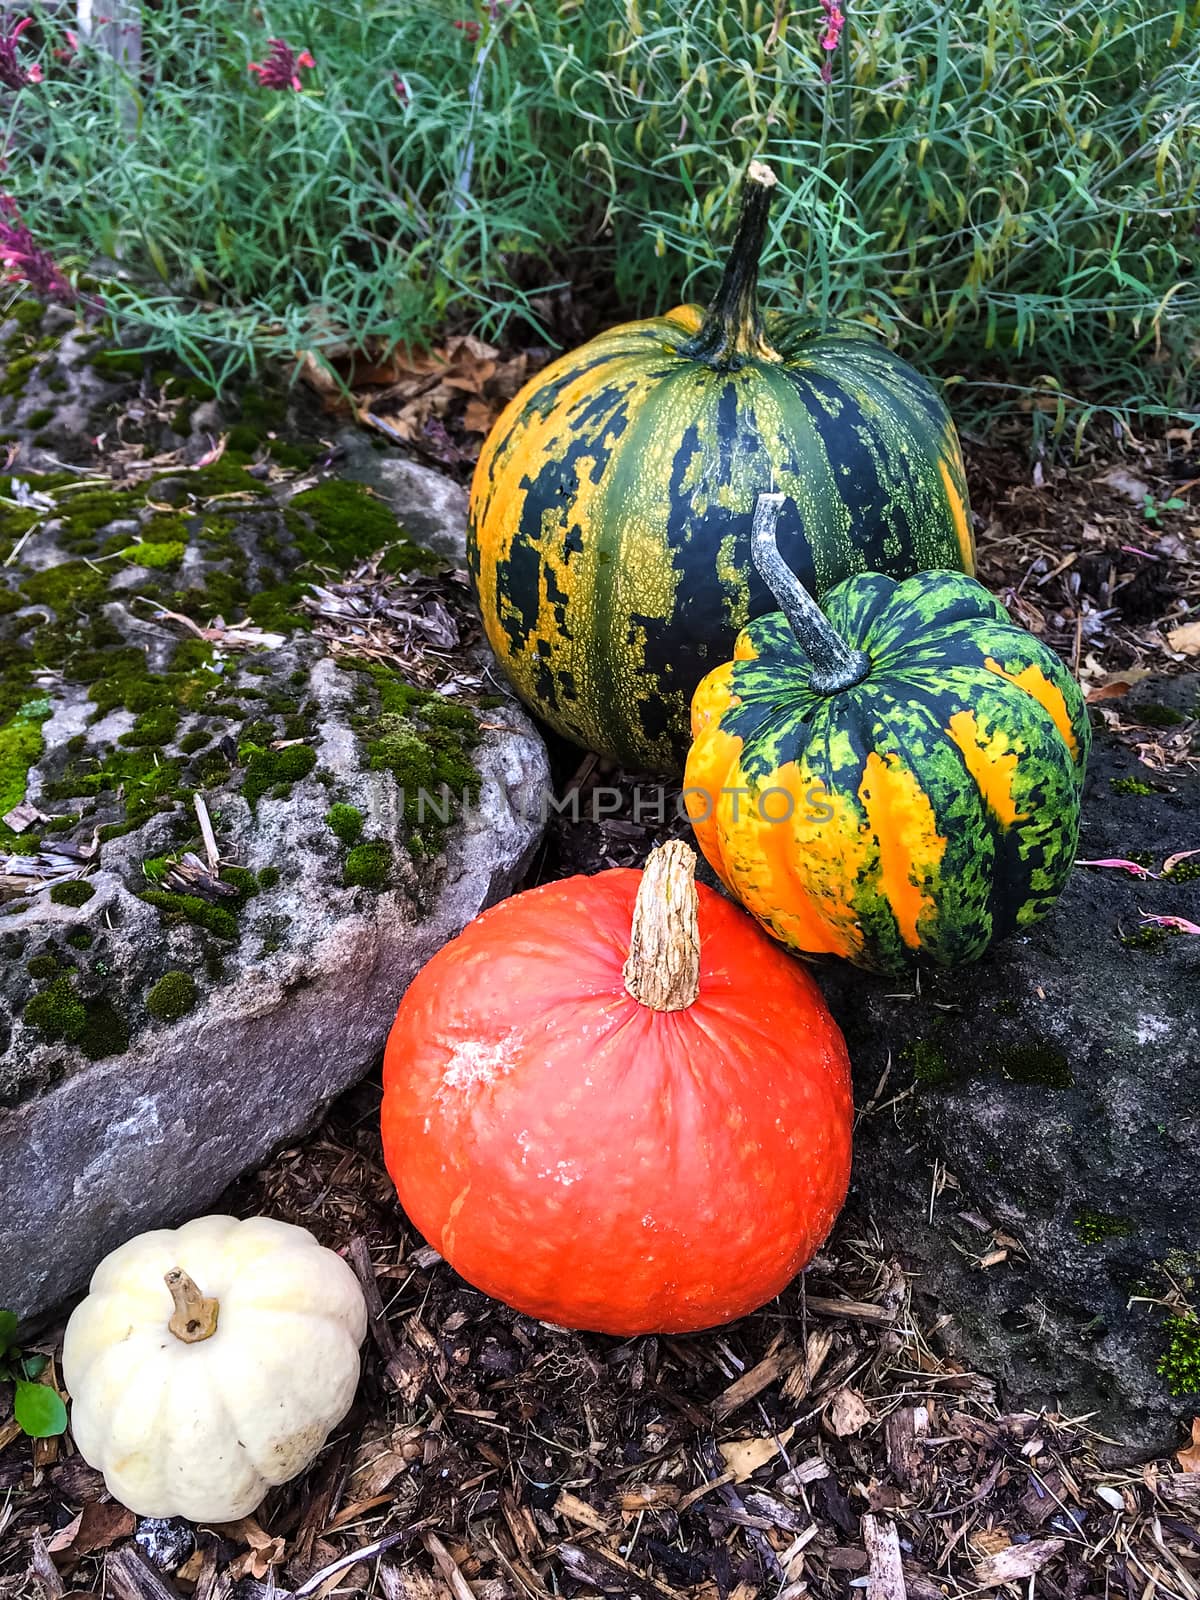 Four colorful pumpkins decorating an autumn garden.